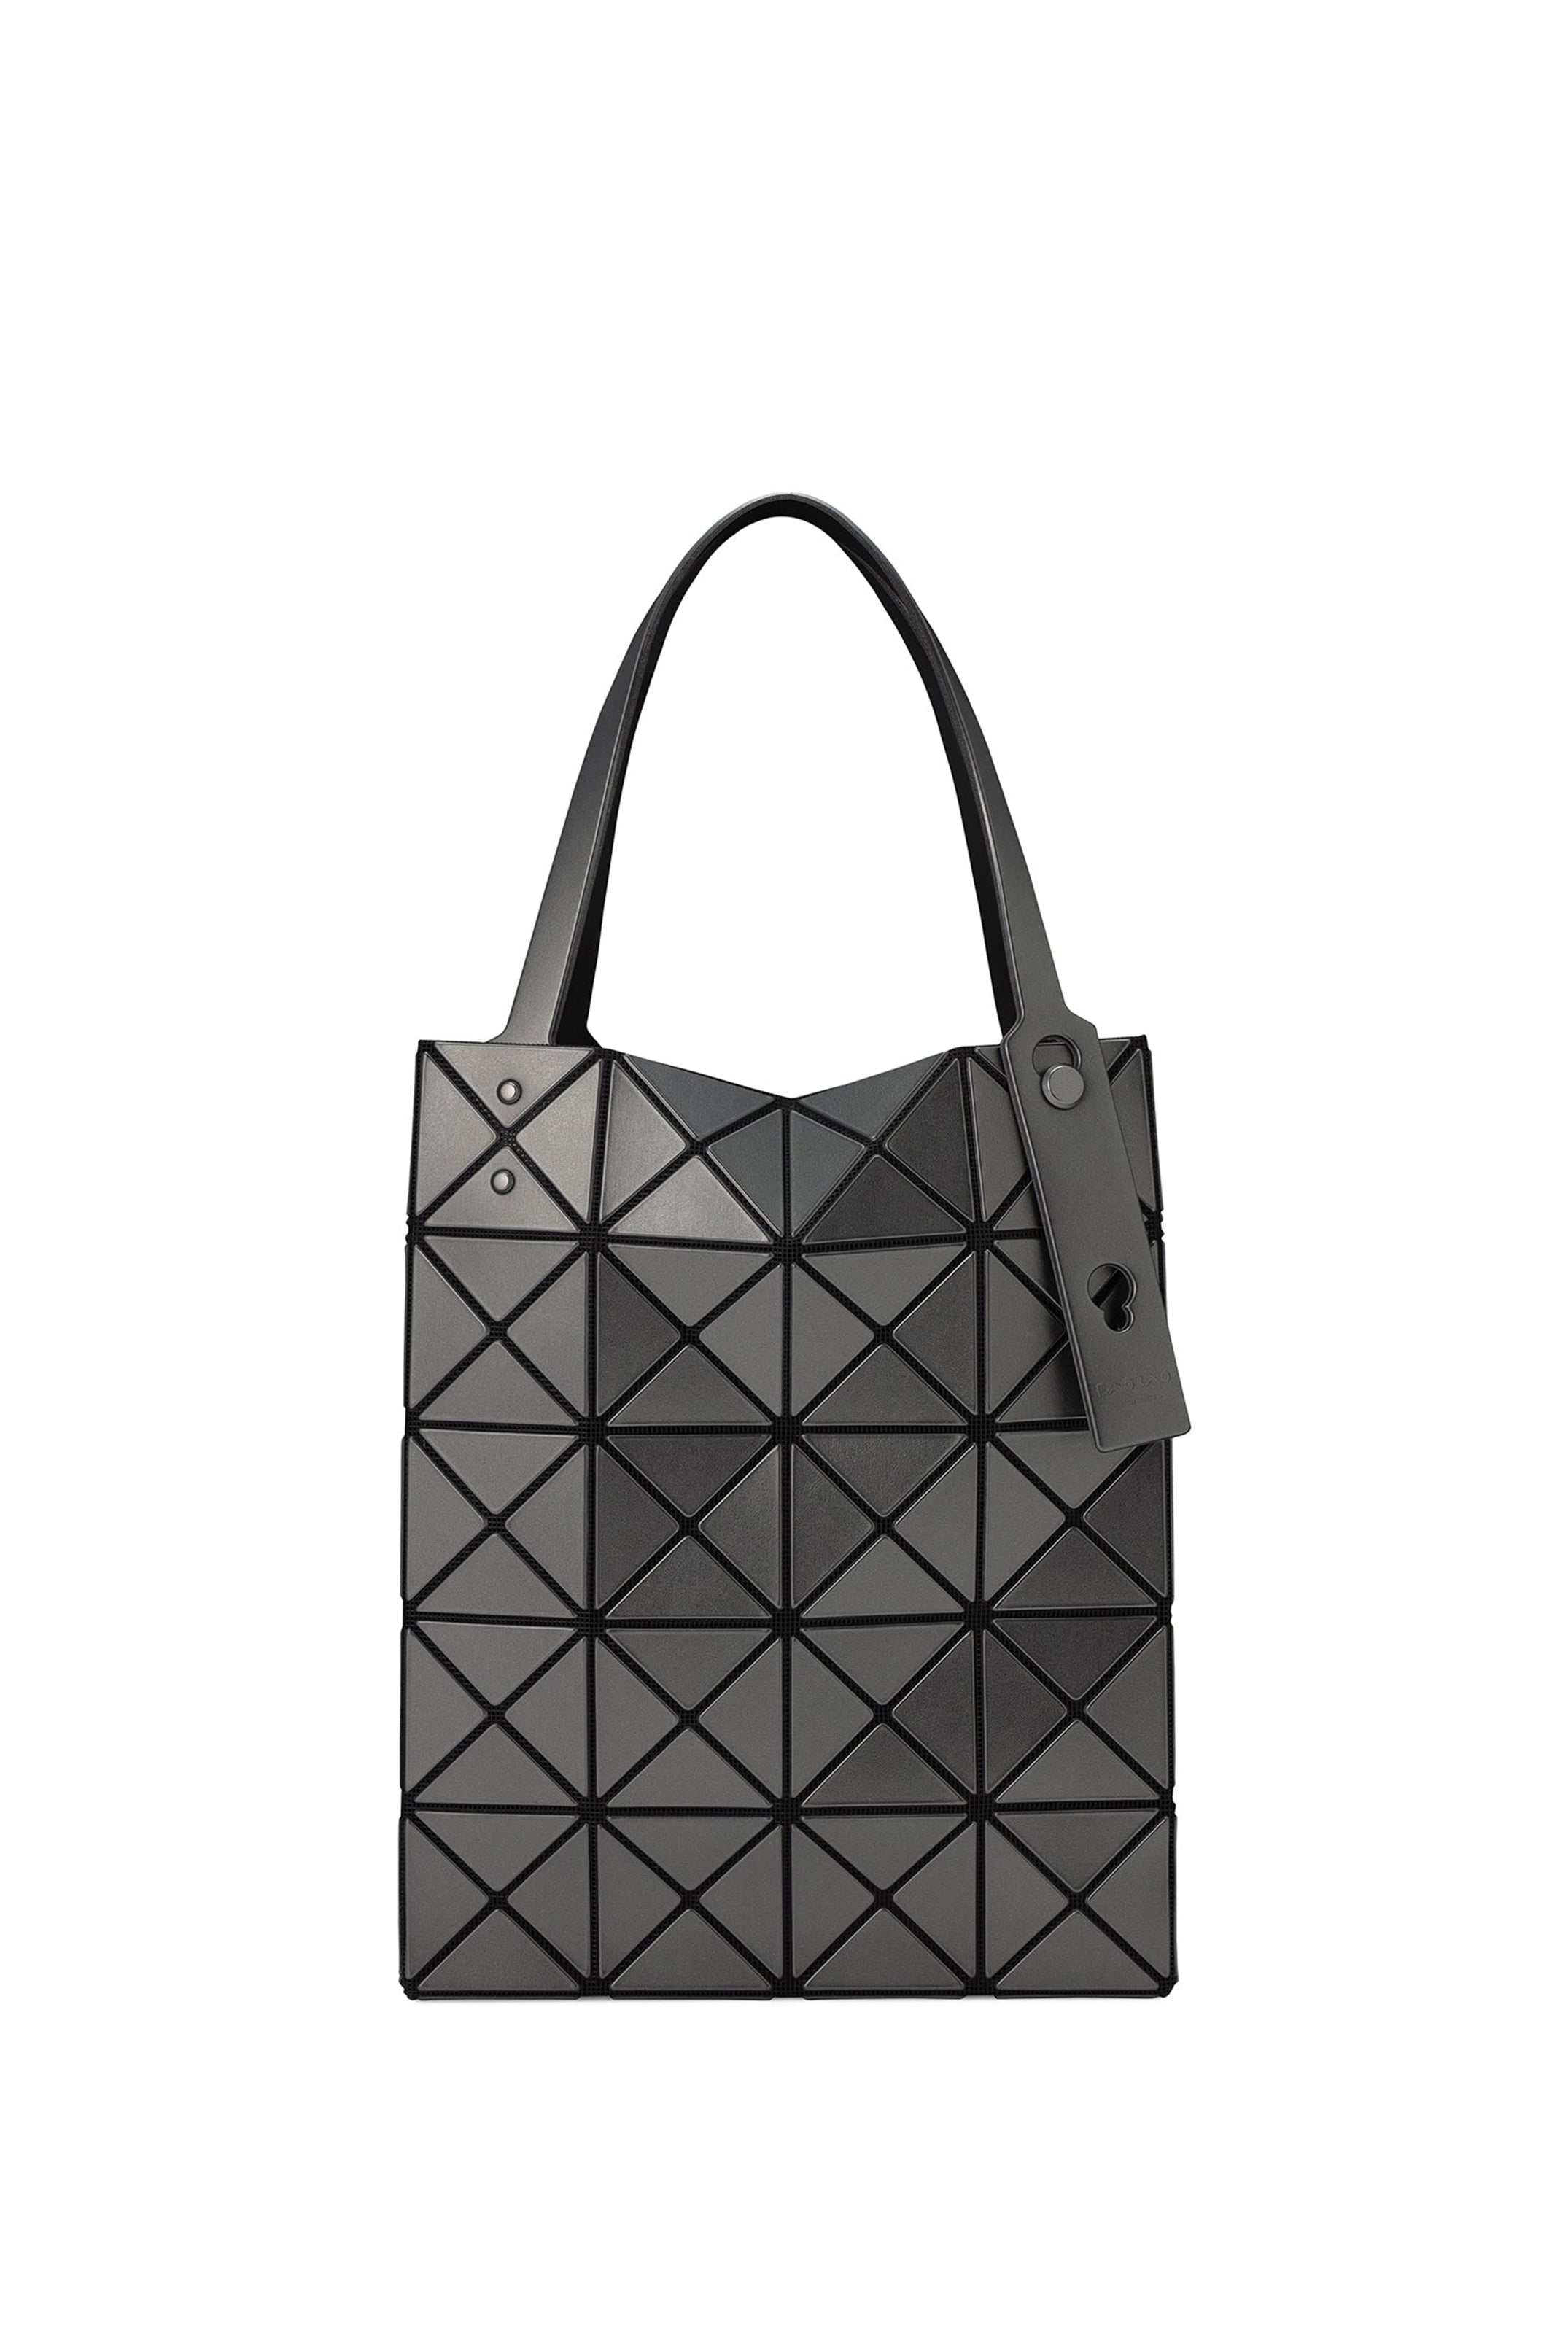 Bao Bao Issey Miyake Lucent Boxy Tote Bag in Dark Silver – Ashia Mode